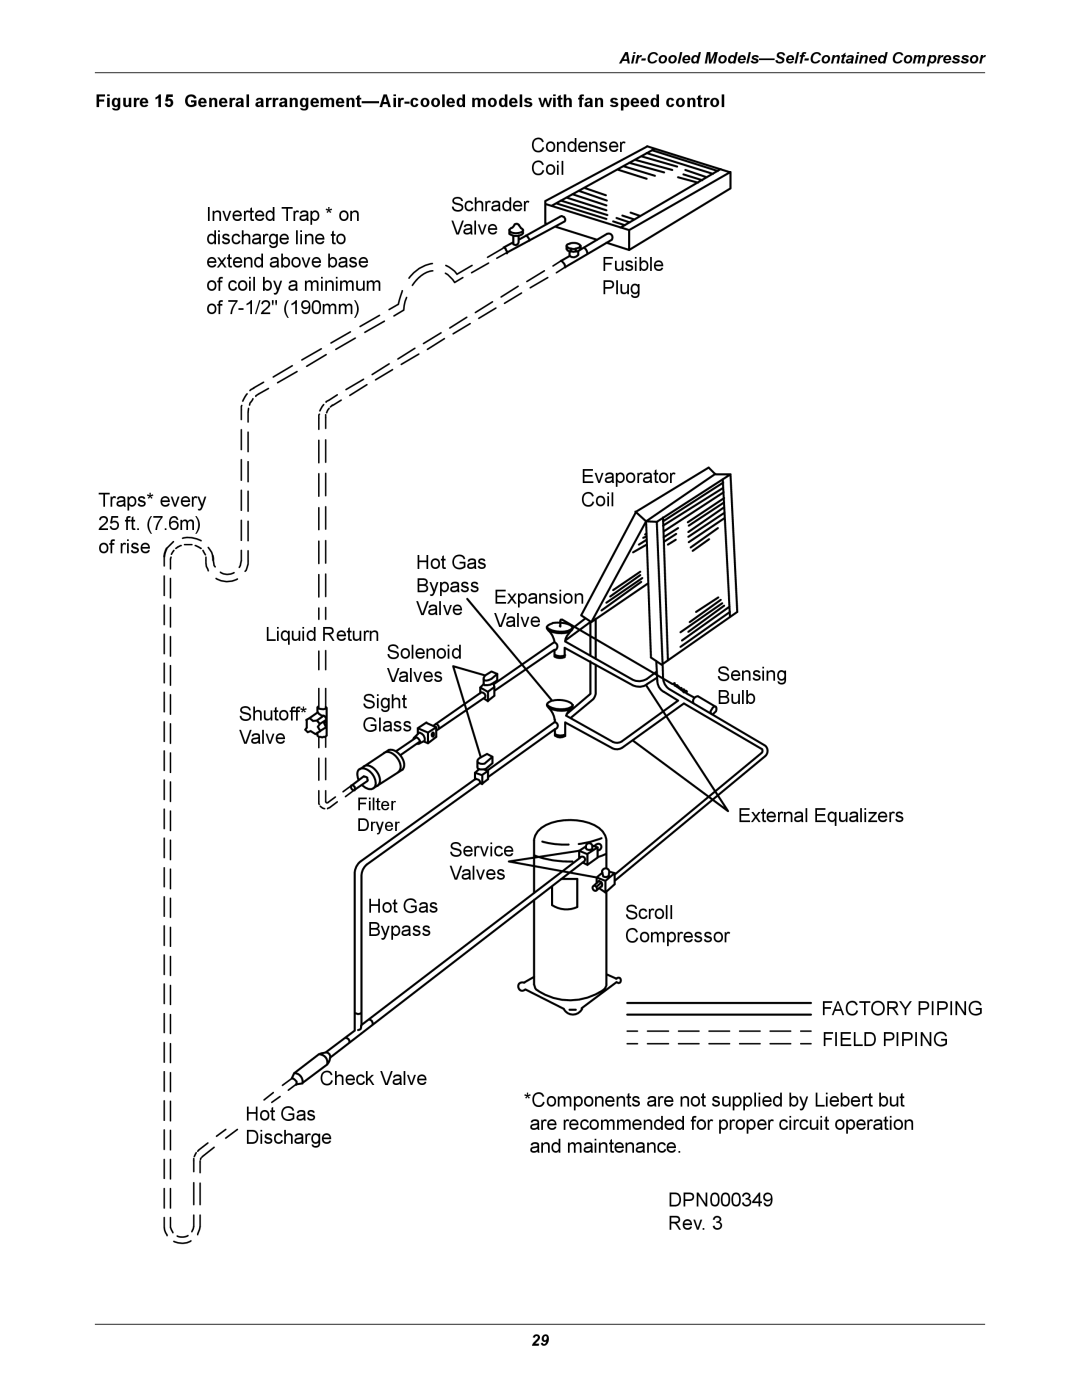 Emerson 3000 installation manual Condenser Coil Schrader Valve Fusible Plug 